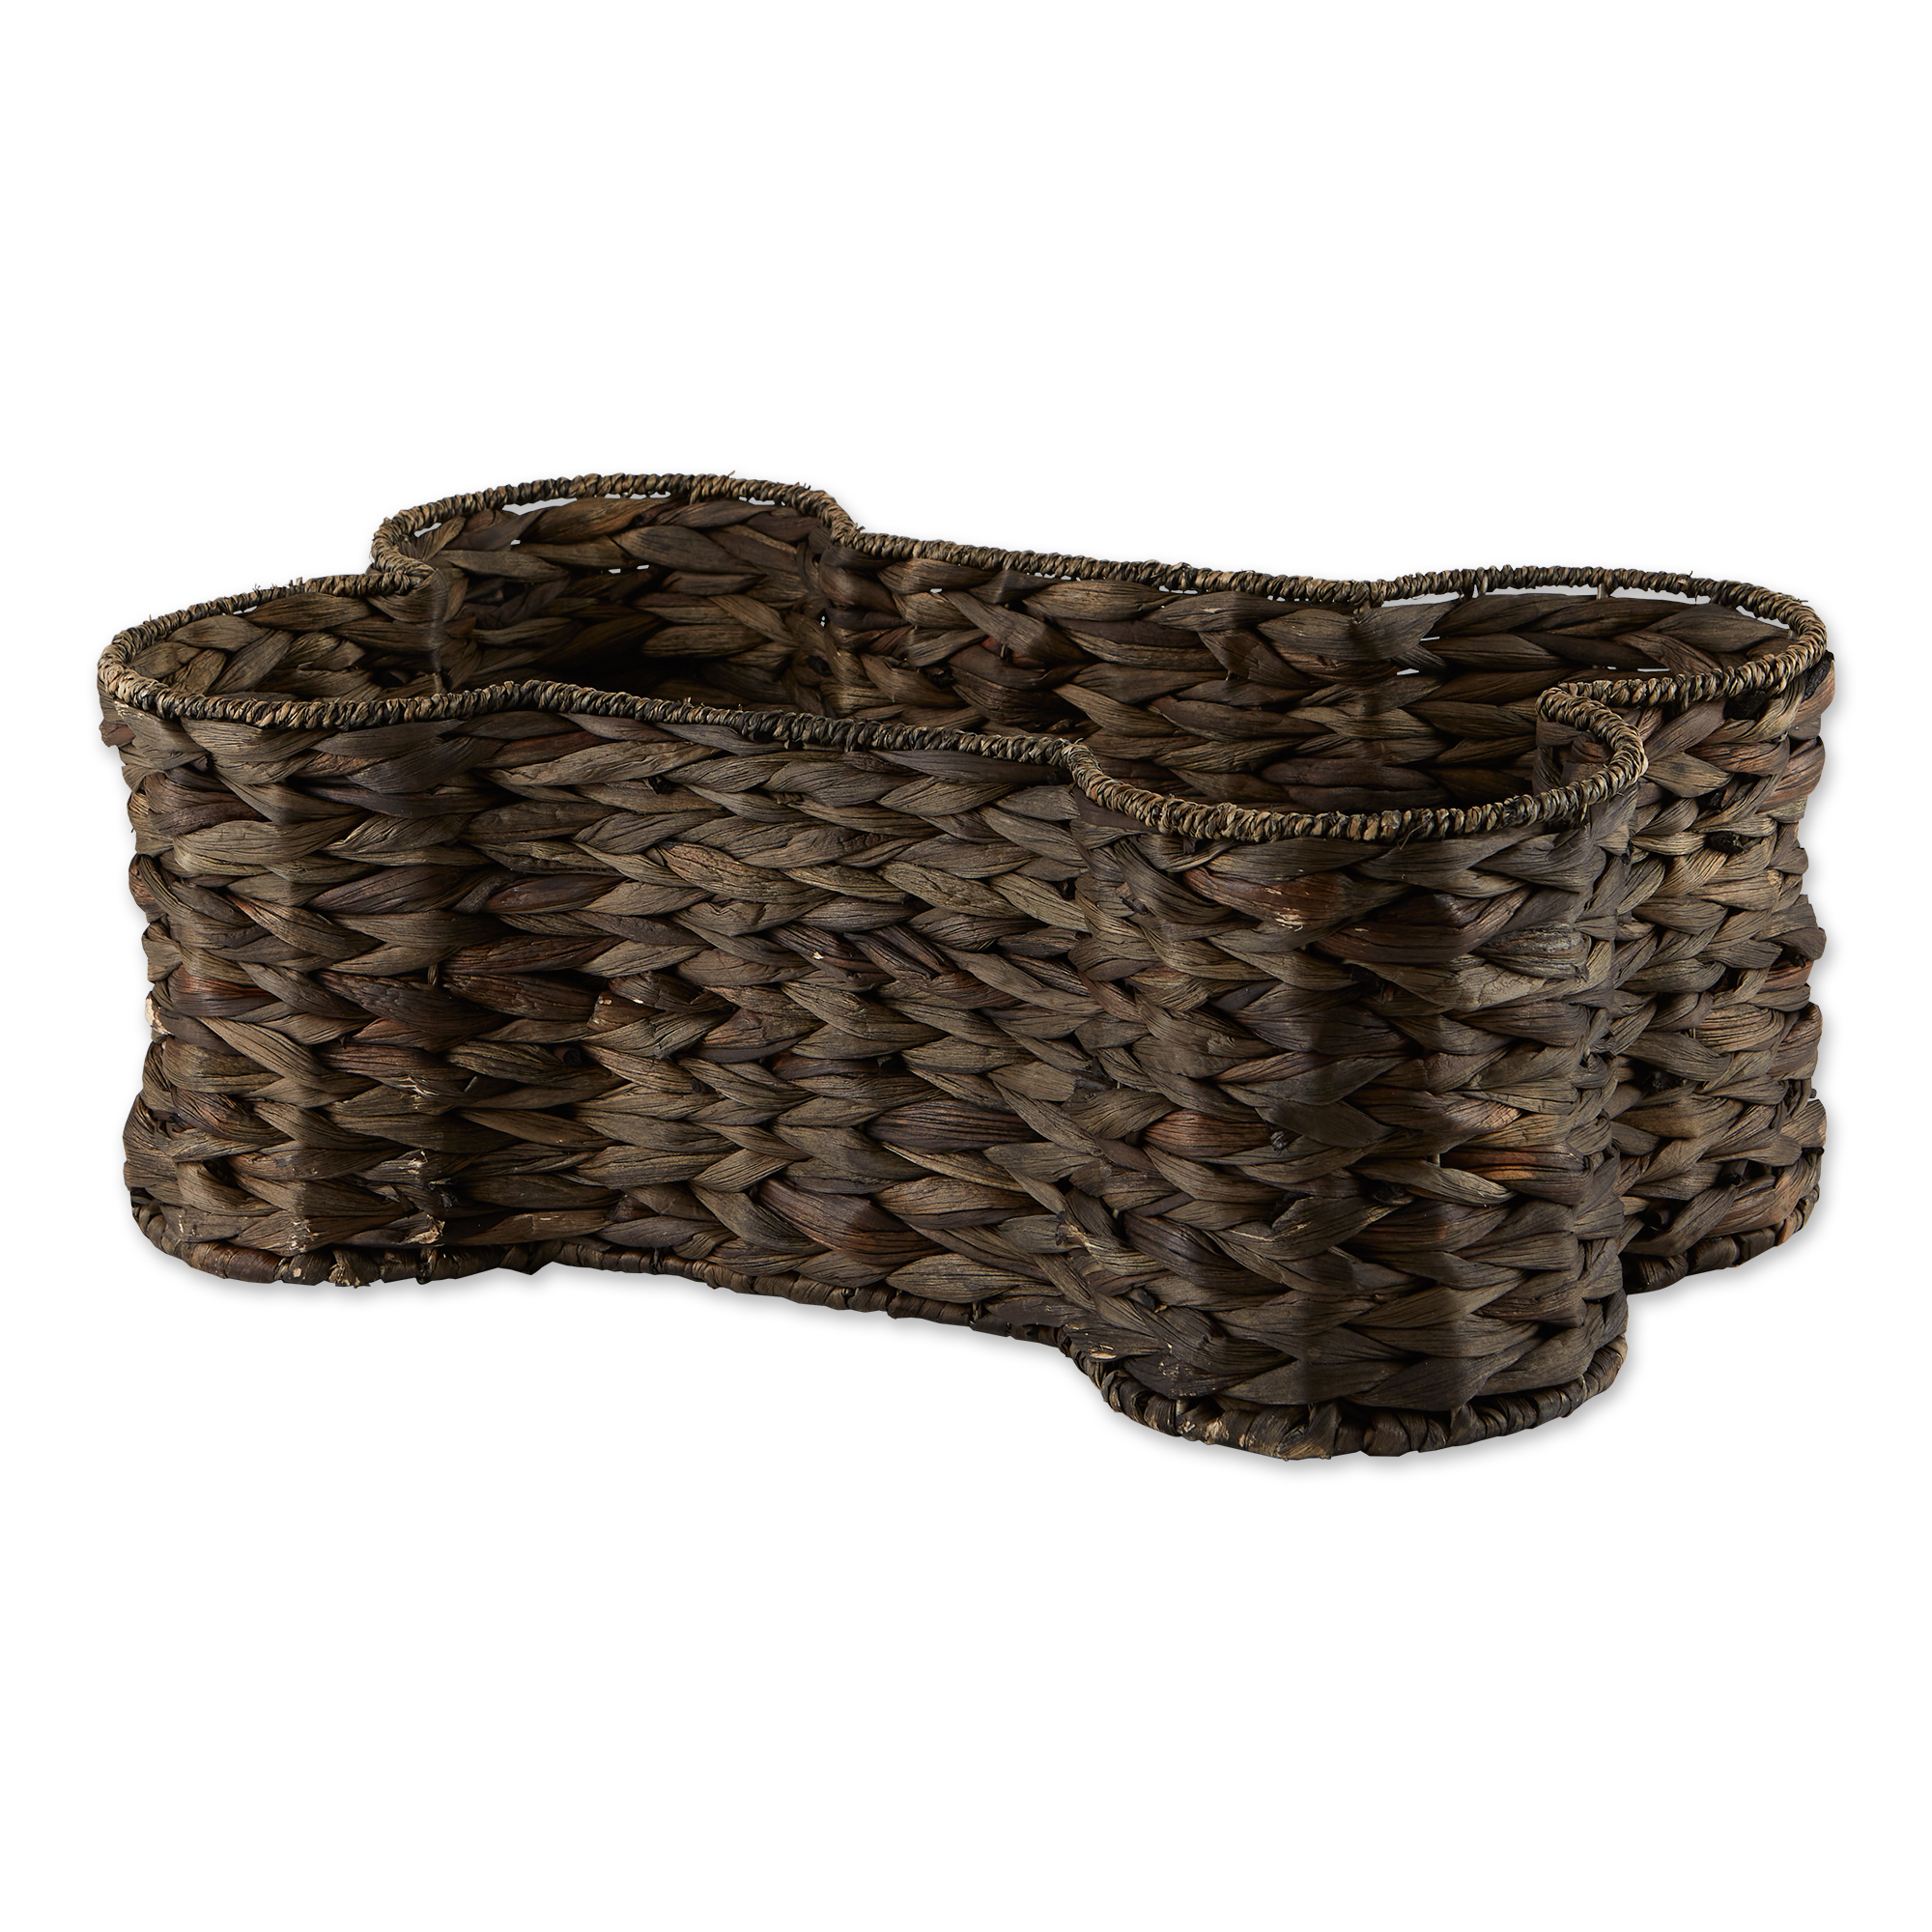 Bone Dry Gray Wash Hyacinth Bone Pet Basket Large 24x15x9